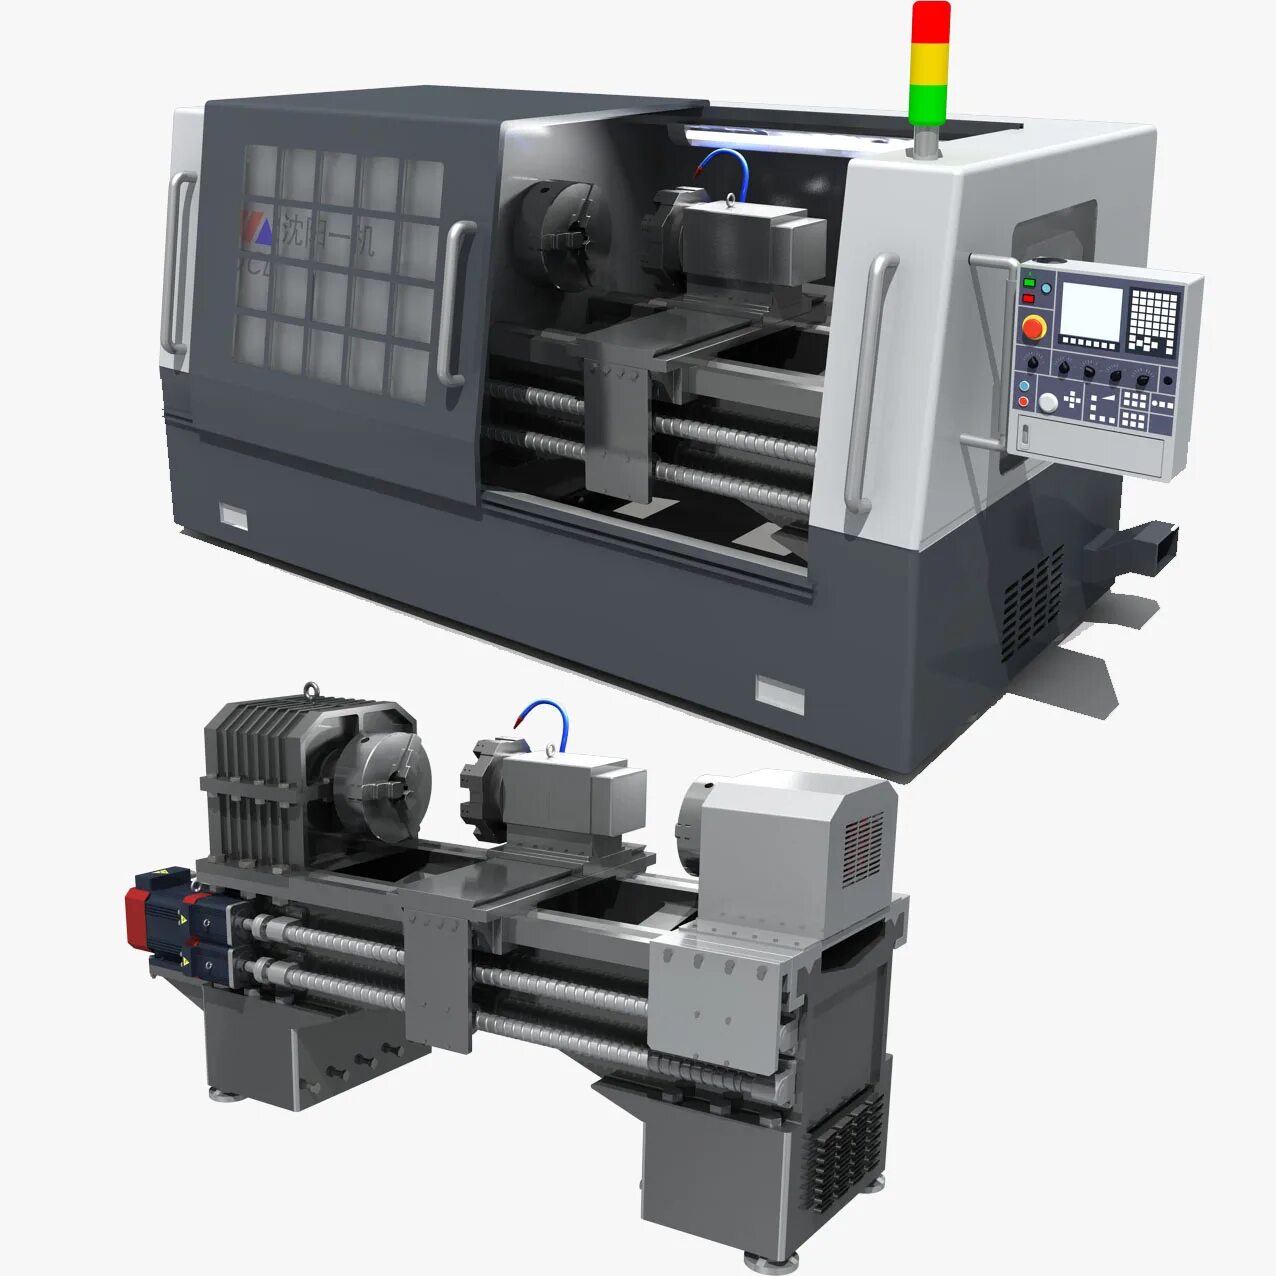 Ntx1000 станок. Станок Multicam 3d модель станка. 3d models CNC Machine. Станок CNC 3d. The d machine